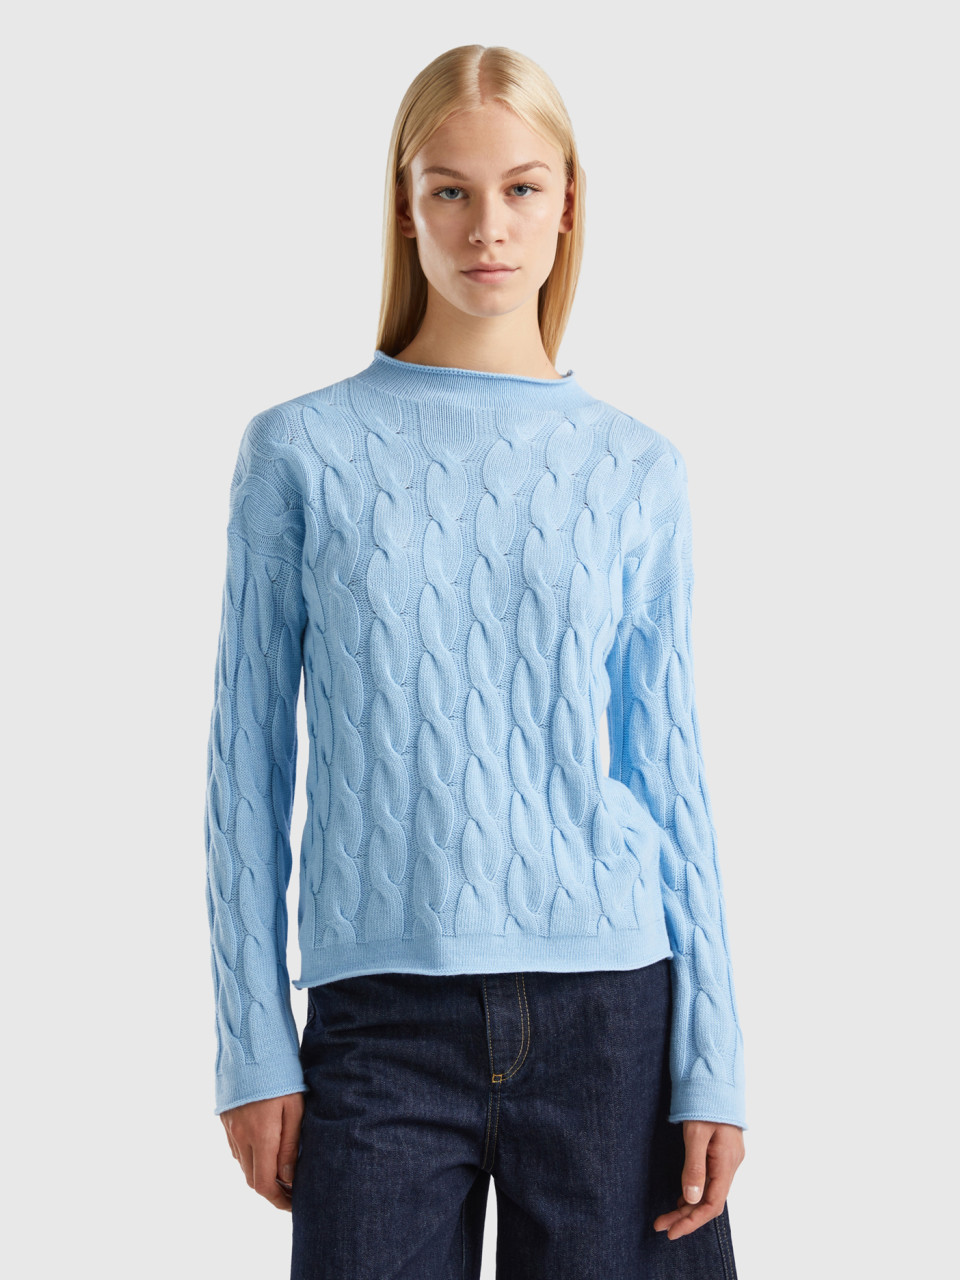 Benetton, Cable Knit Sweater, Light Blue, Women